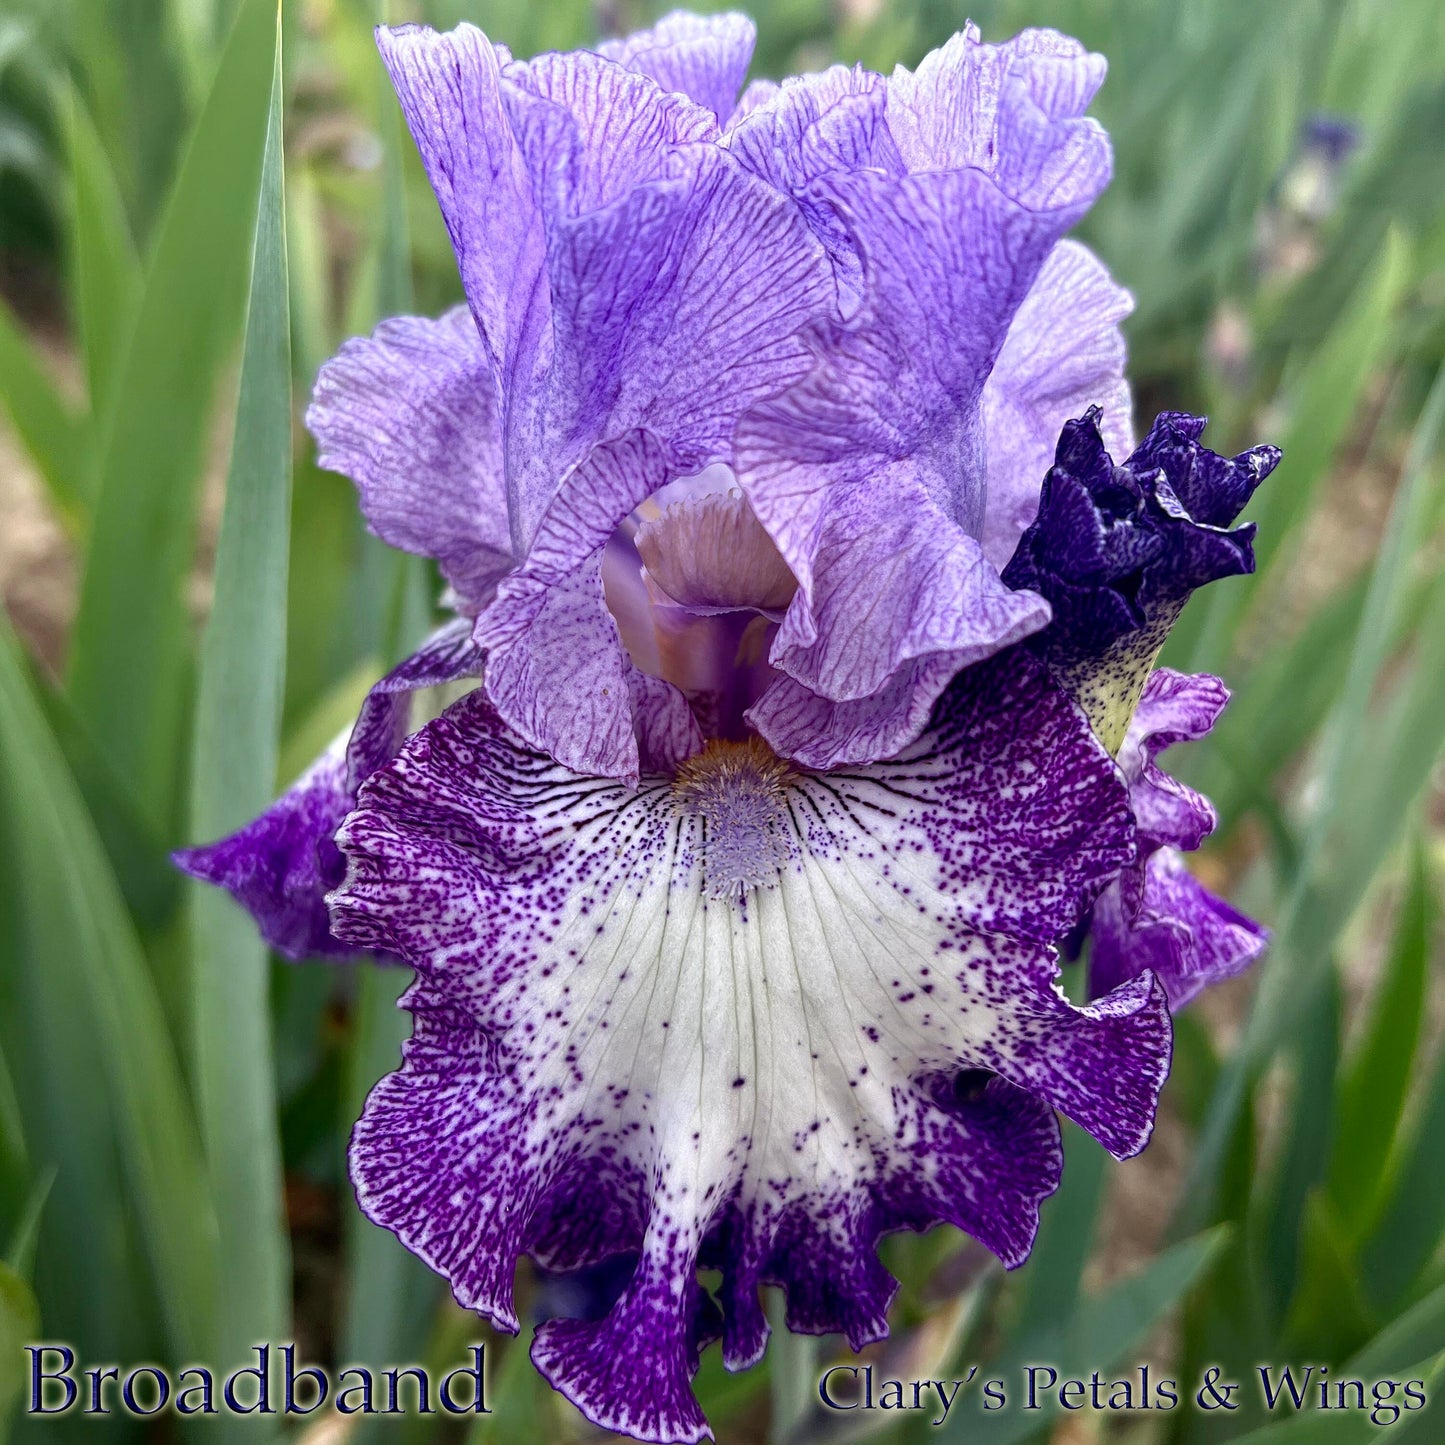 Broadband - 2001 Tall Bearded Iris - huge blooms